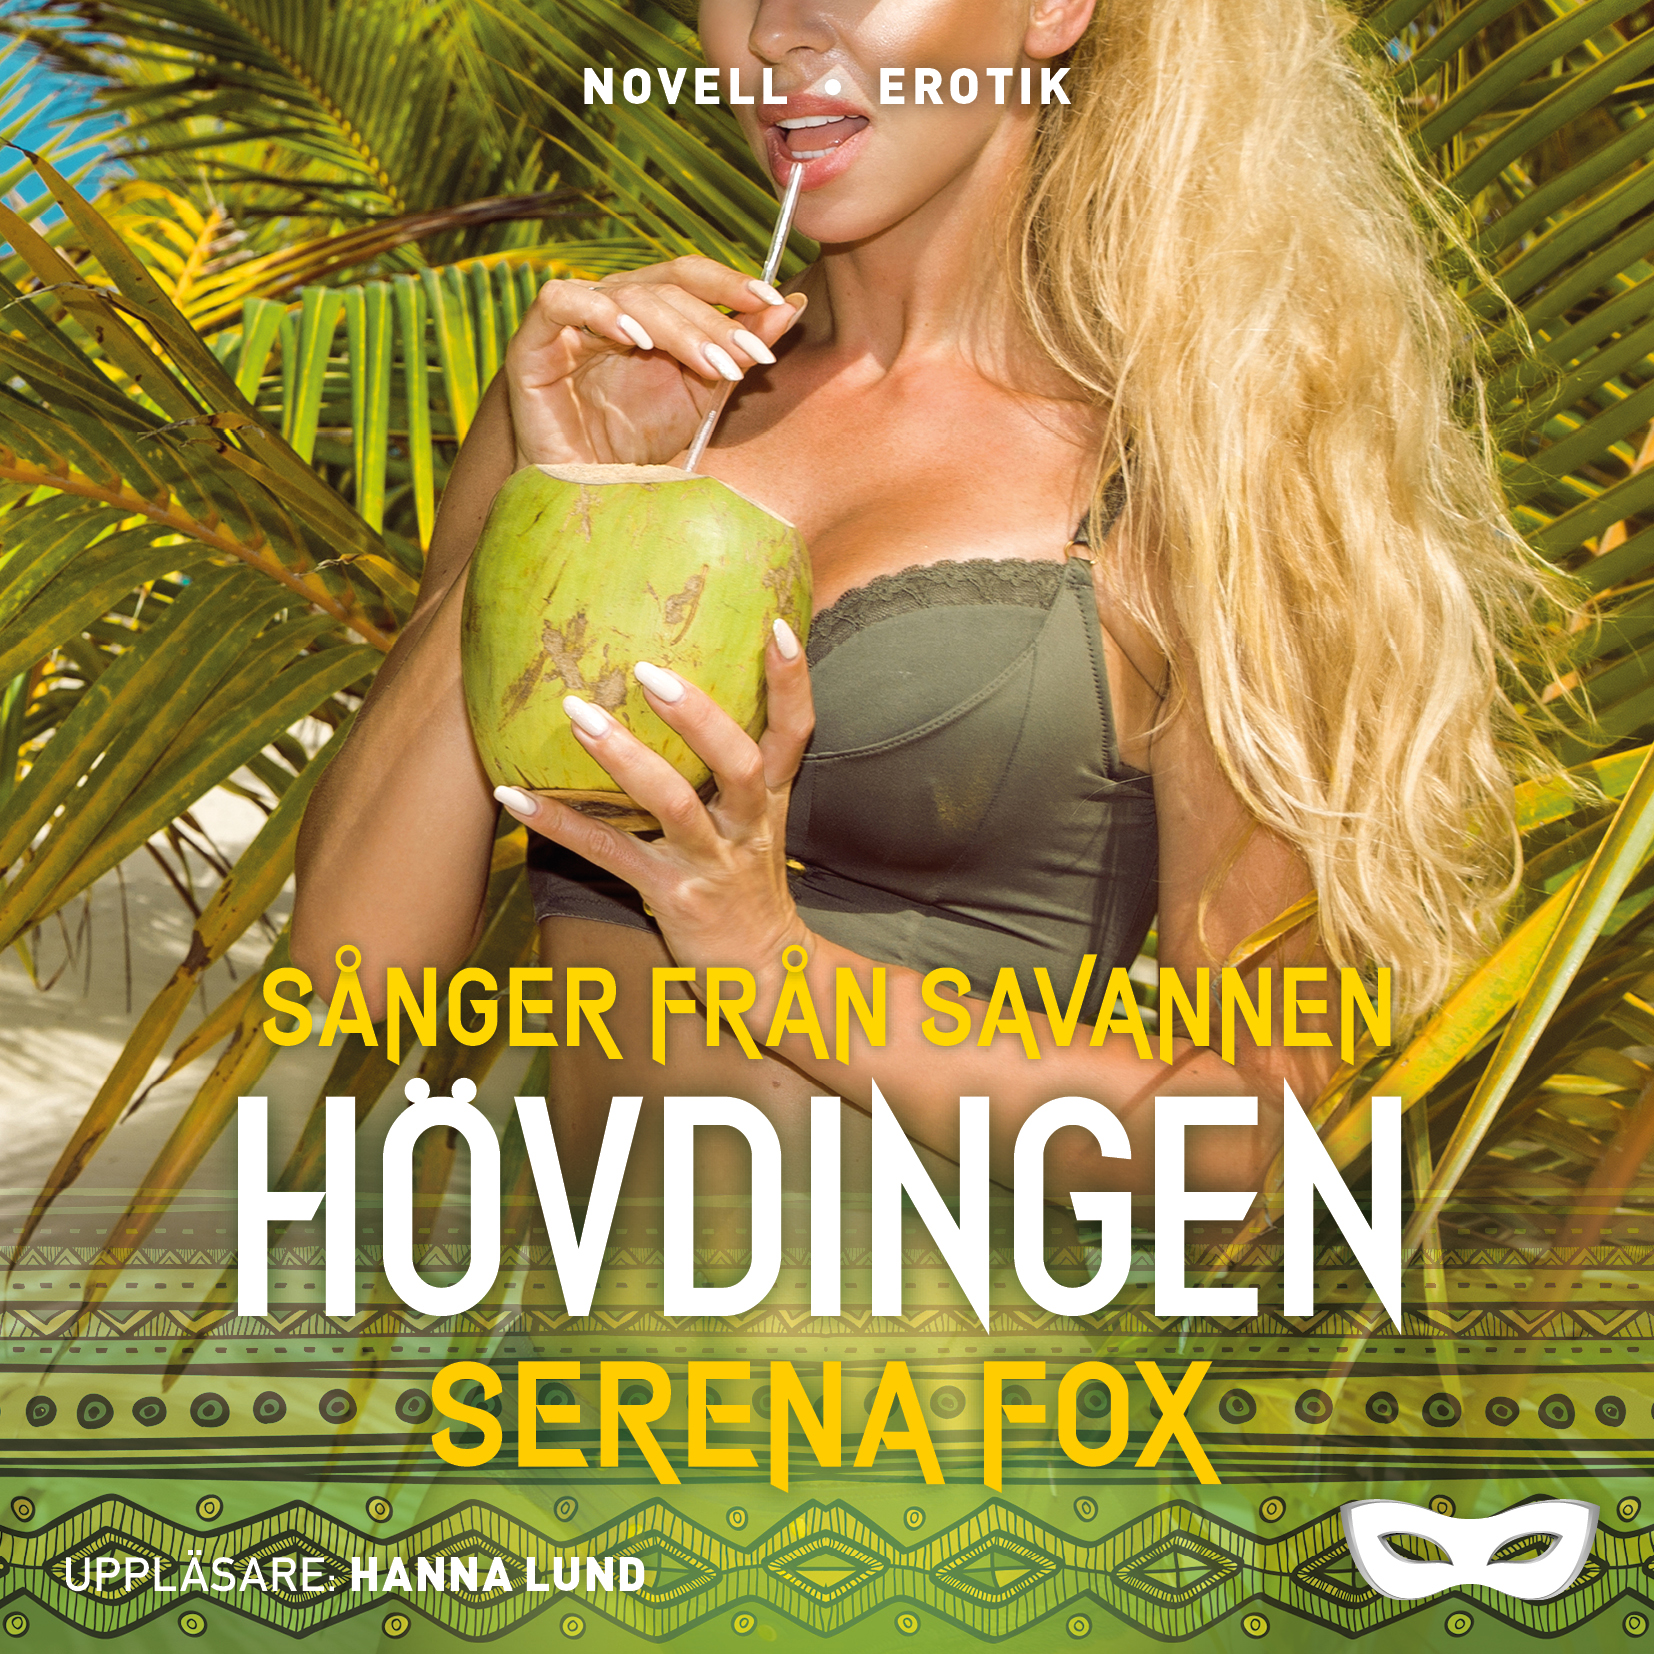 FOX7_Hovdingen_Serena Fox_audio.jpg